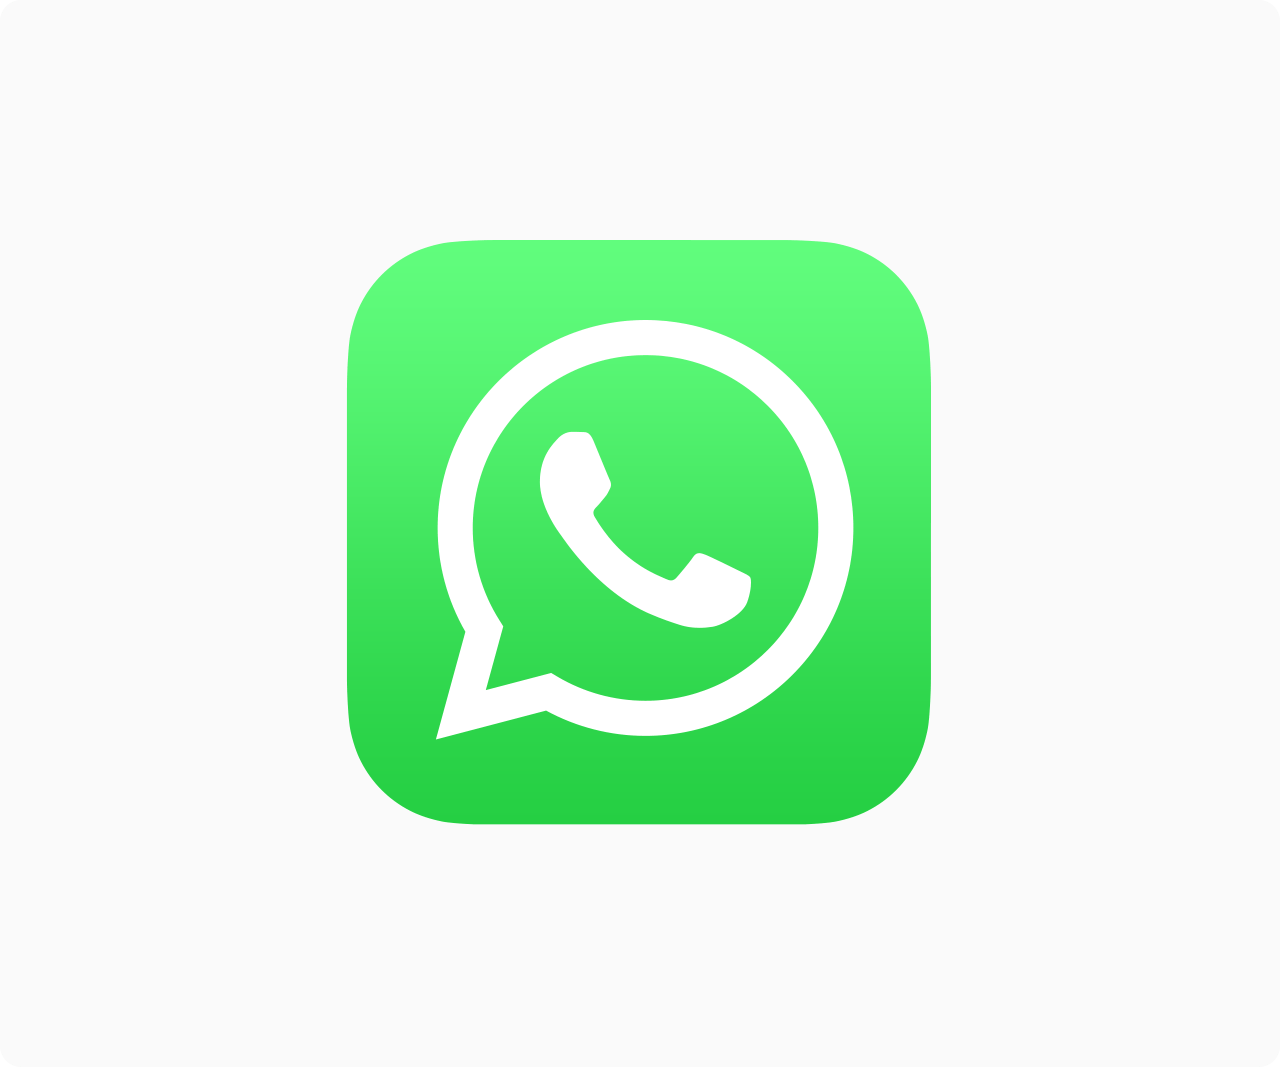 Green and White Telephone Logo - WhatsApp Brand Resources